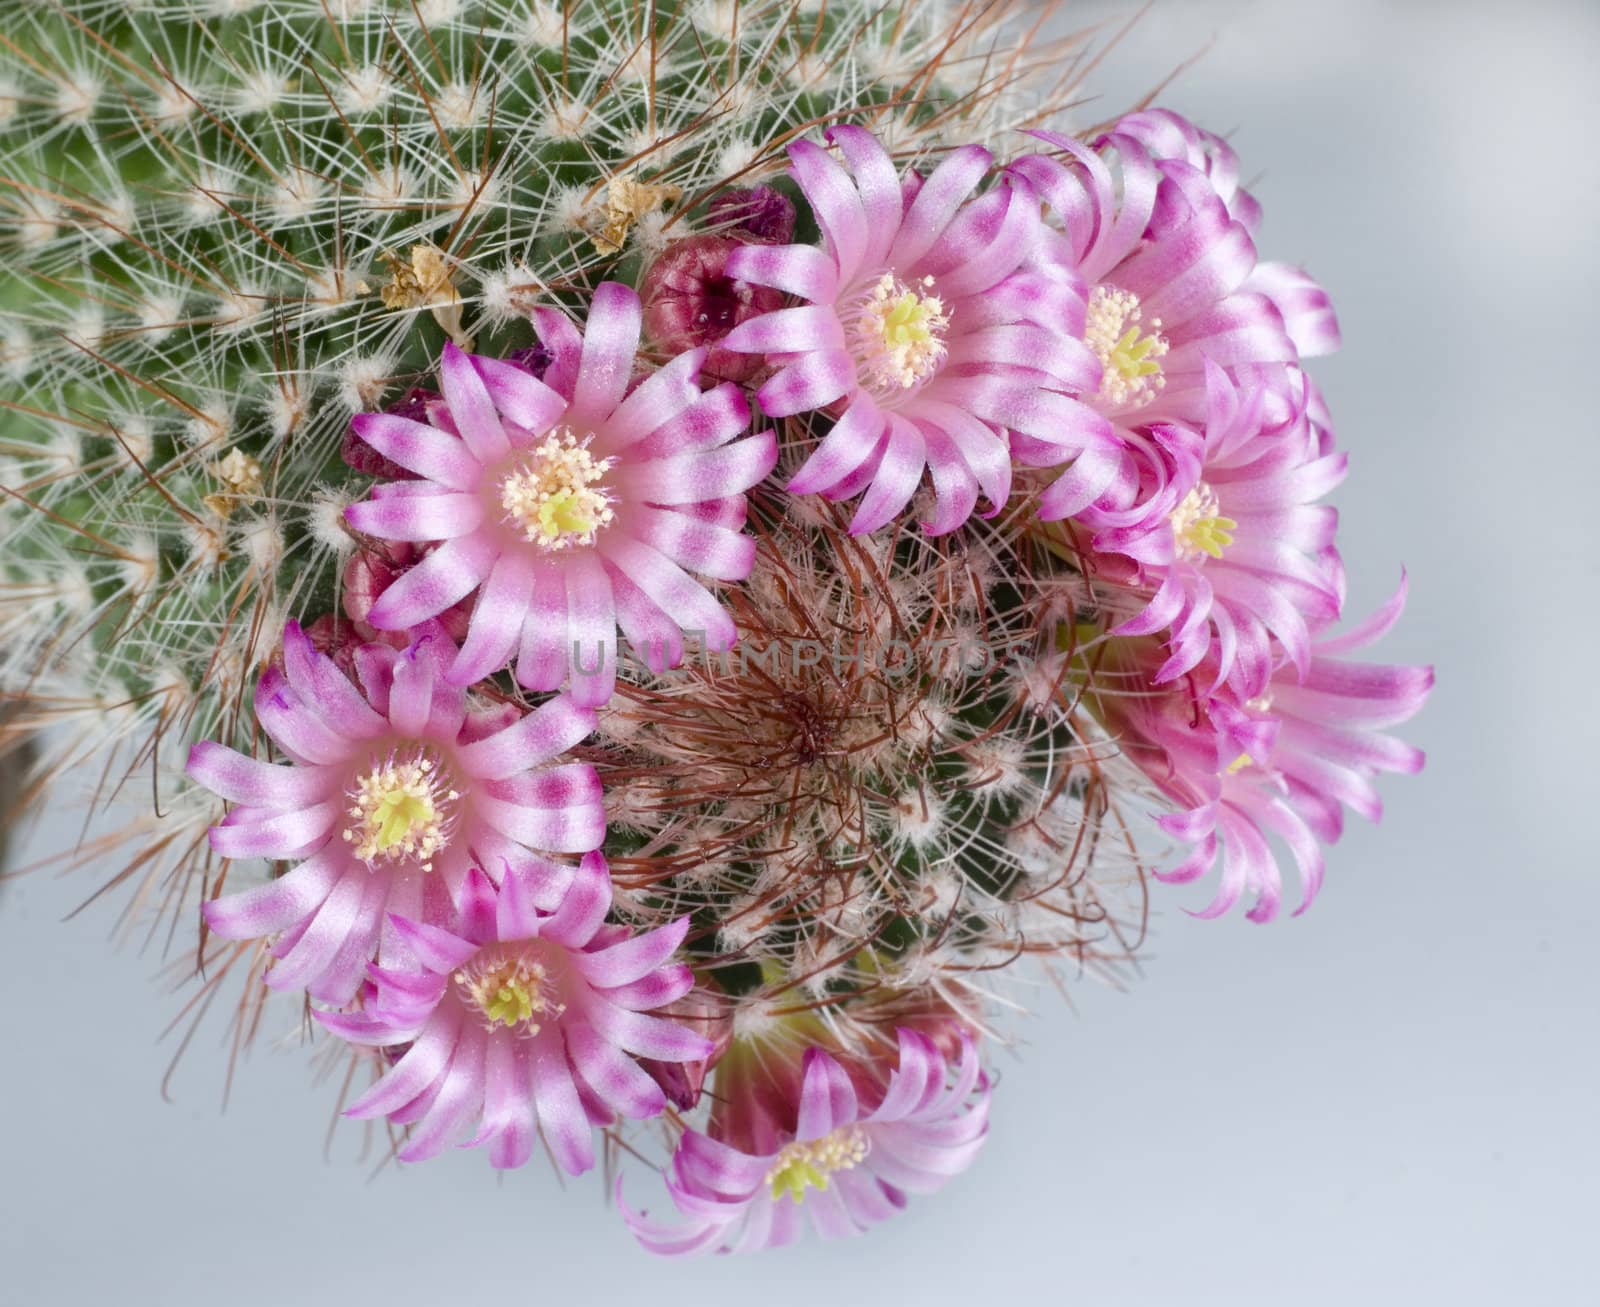 Close up on cactus flower
